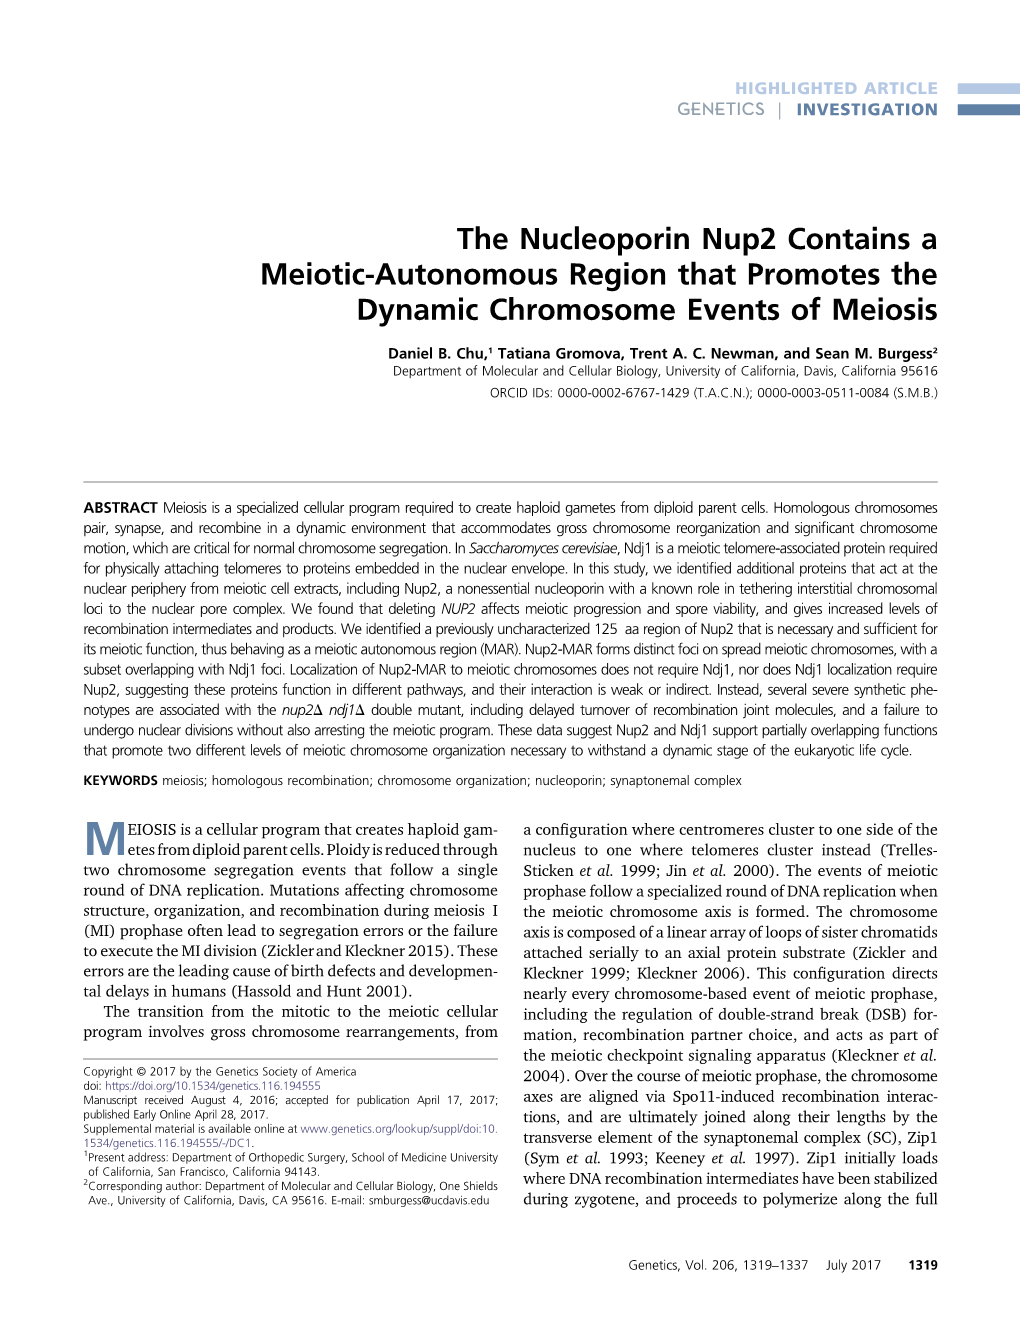 The Nucleoporin Nup2 Contains a Meiotic-Autonomous Region That Promotes the Dynamic Chromosome Events of Meiosis